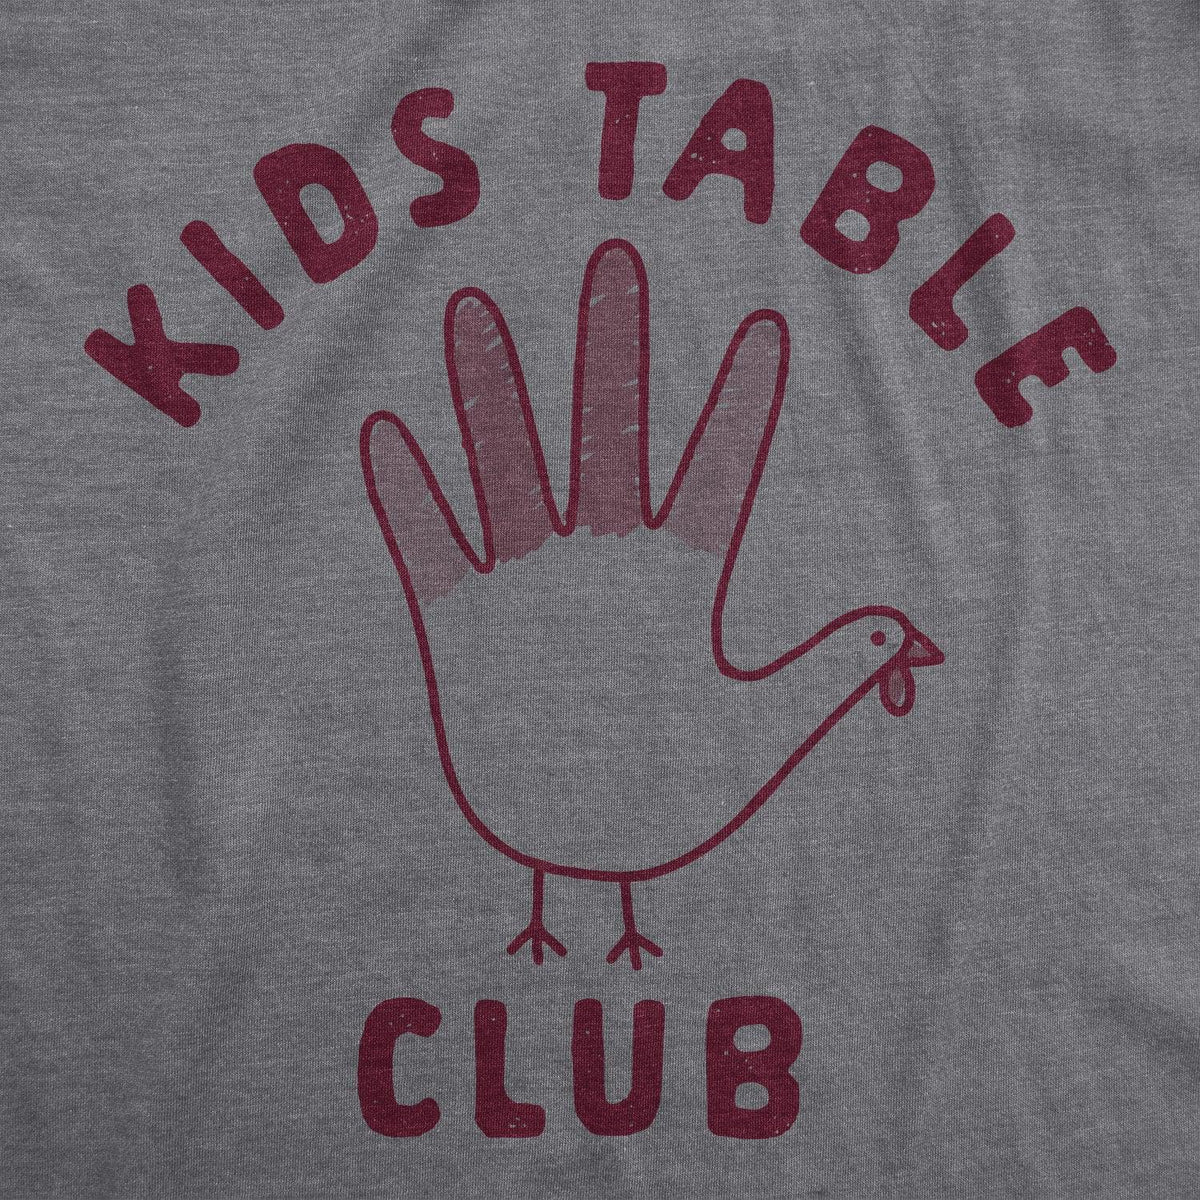 Kids Table Club Youth Tshirt  -  Crazy Dog T-Shirts